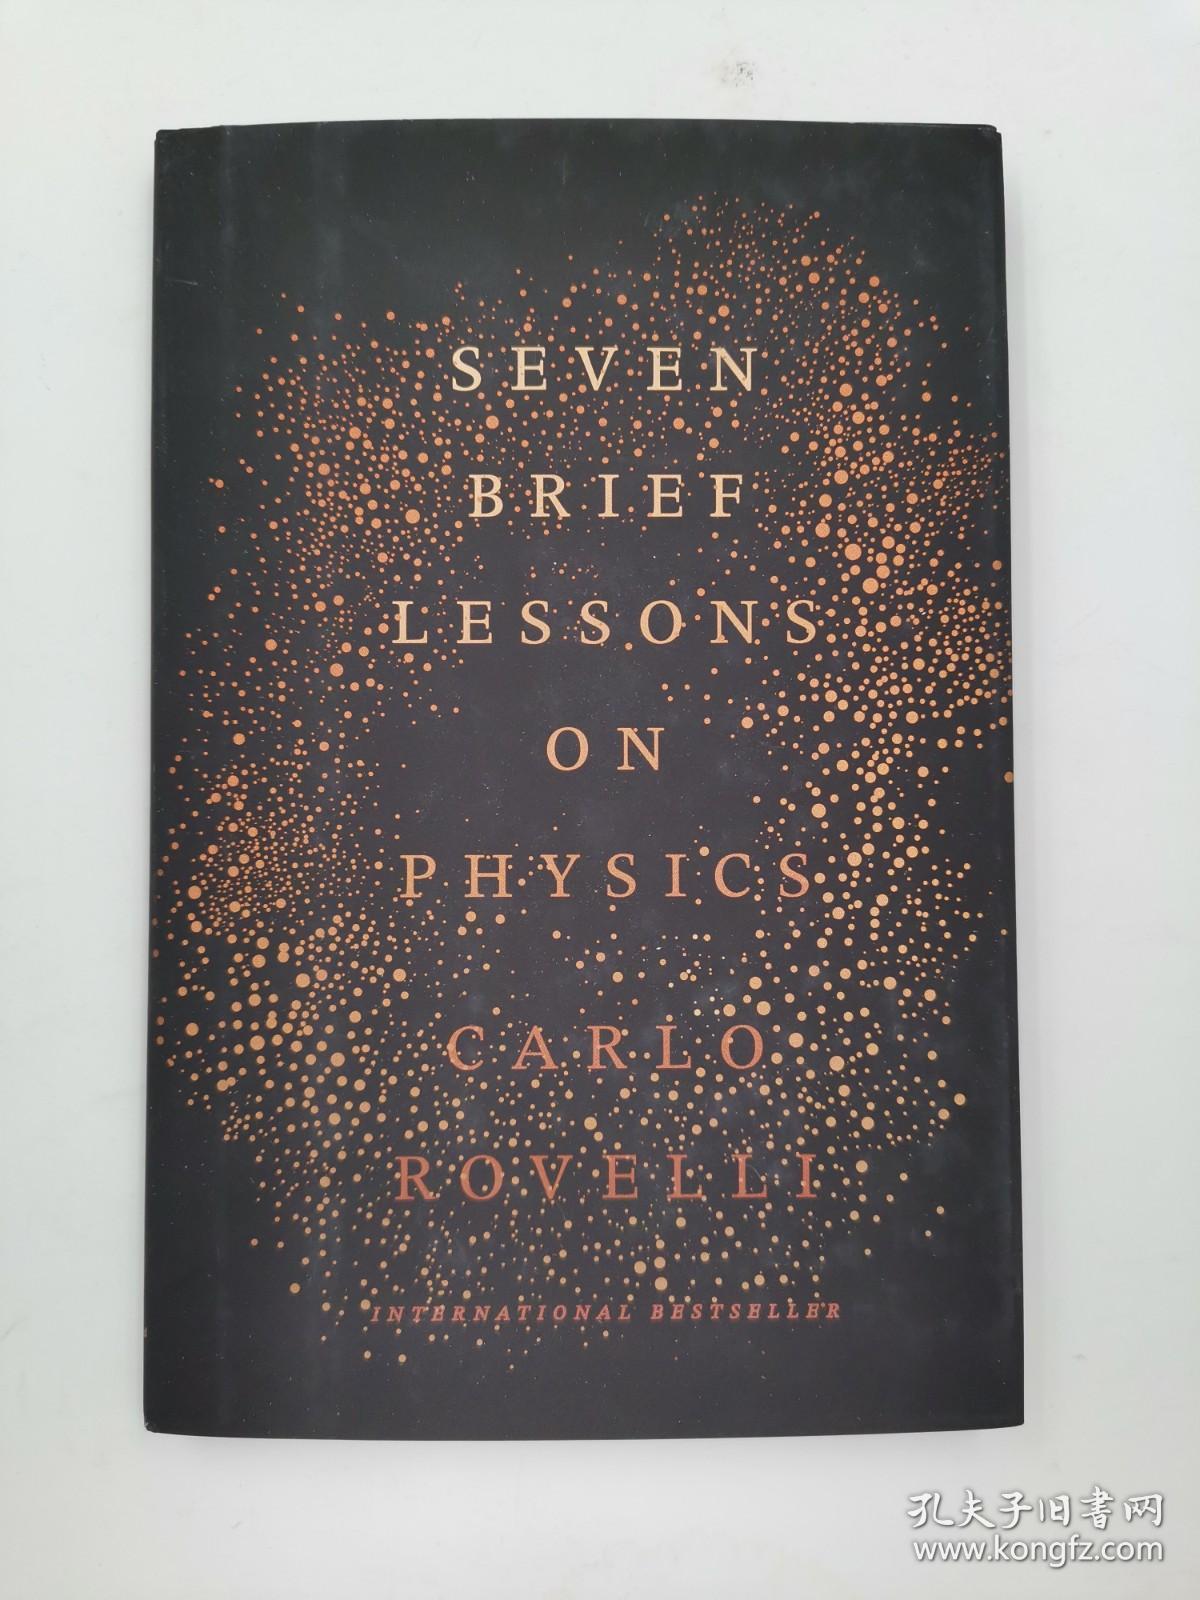 Seven Brief Lessons on Physics: Carlo Rovelli